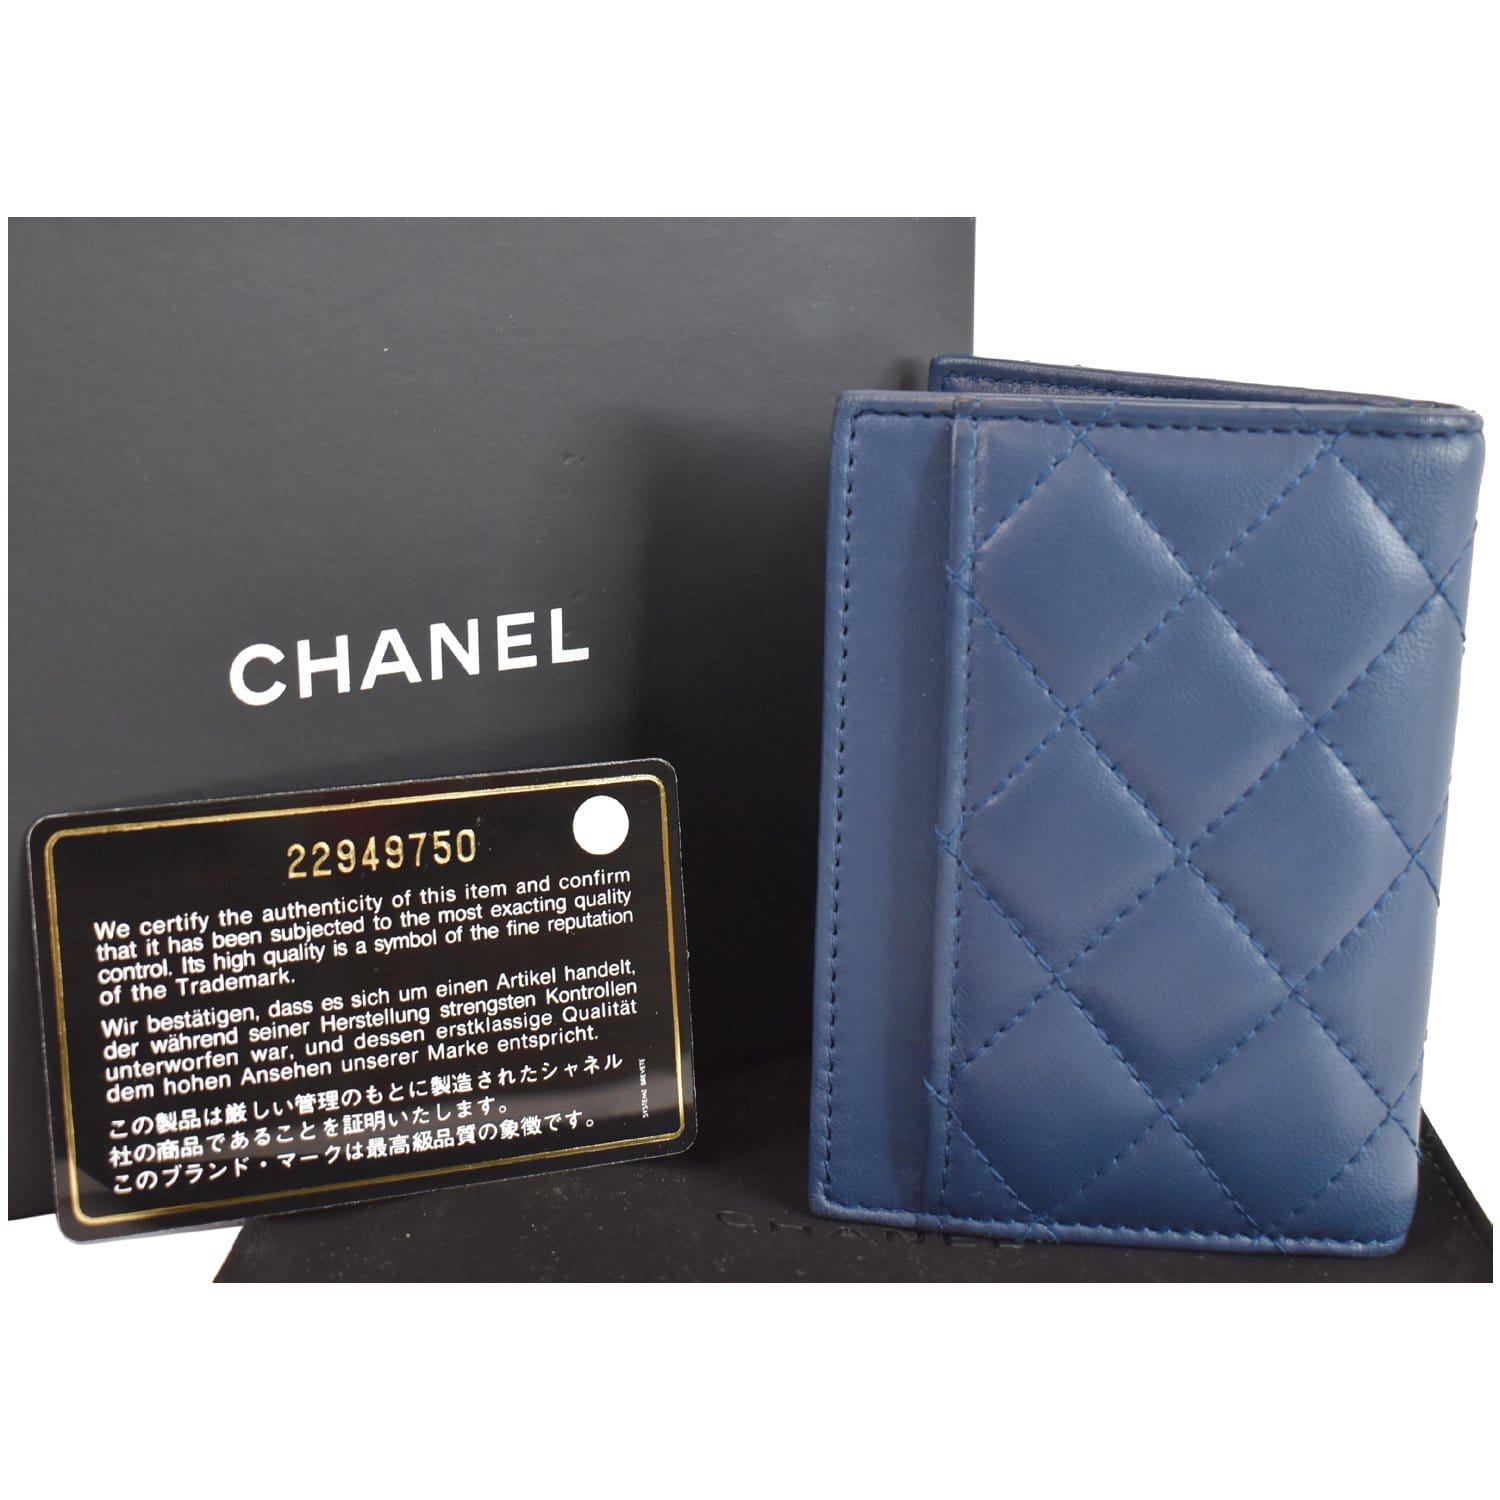 Comparison review: LV & Chanel passport cover 